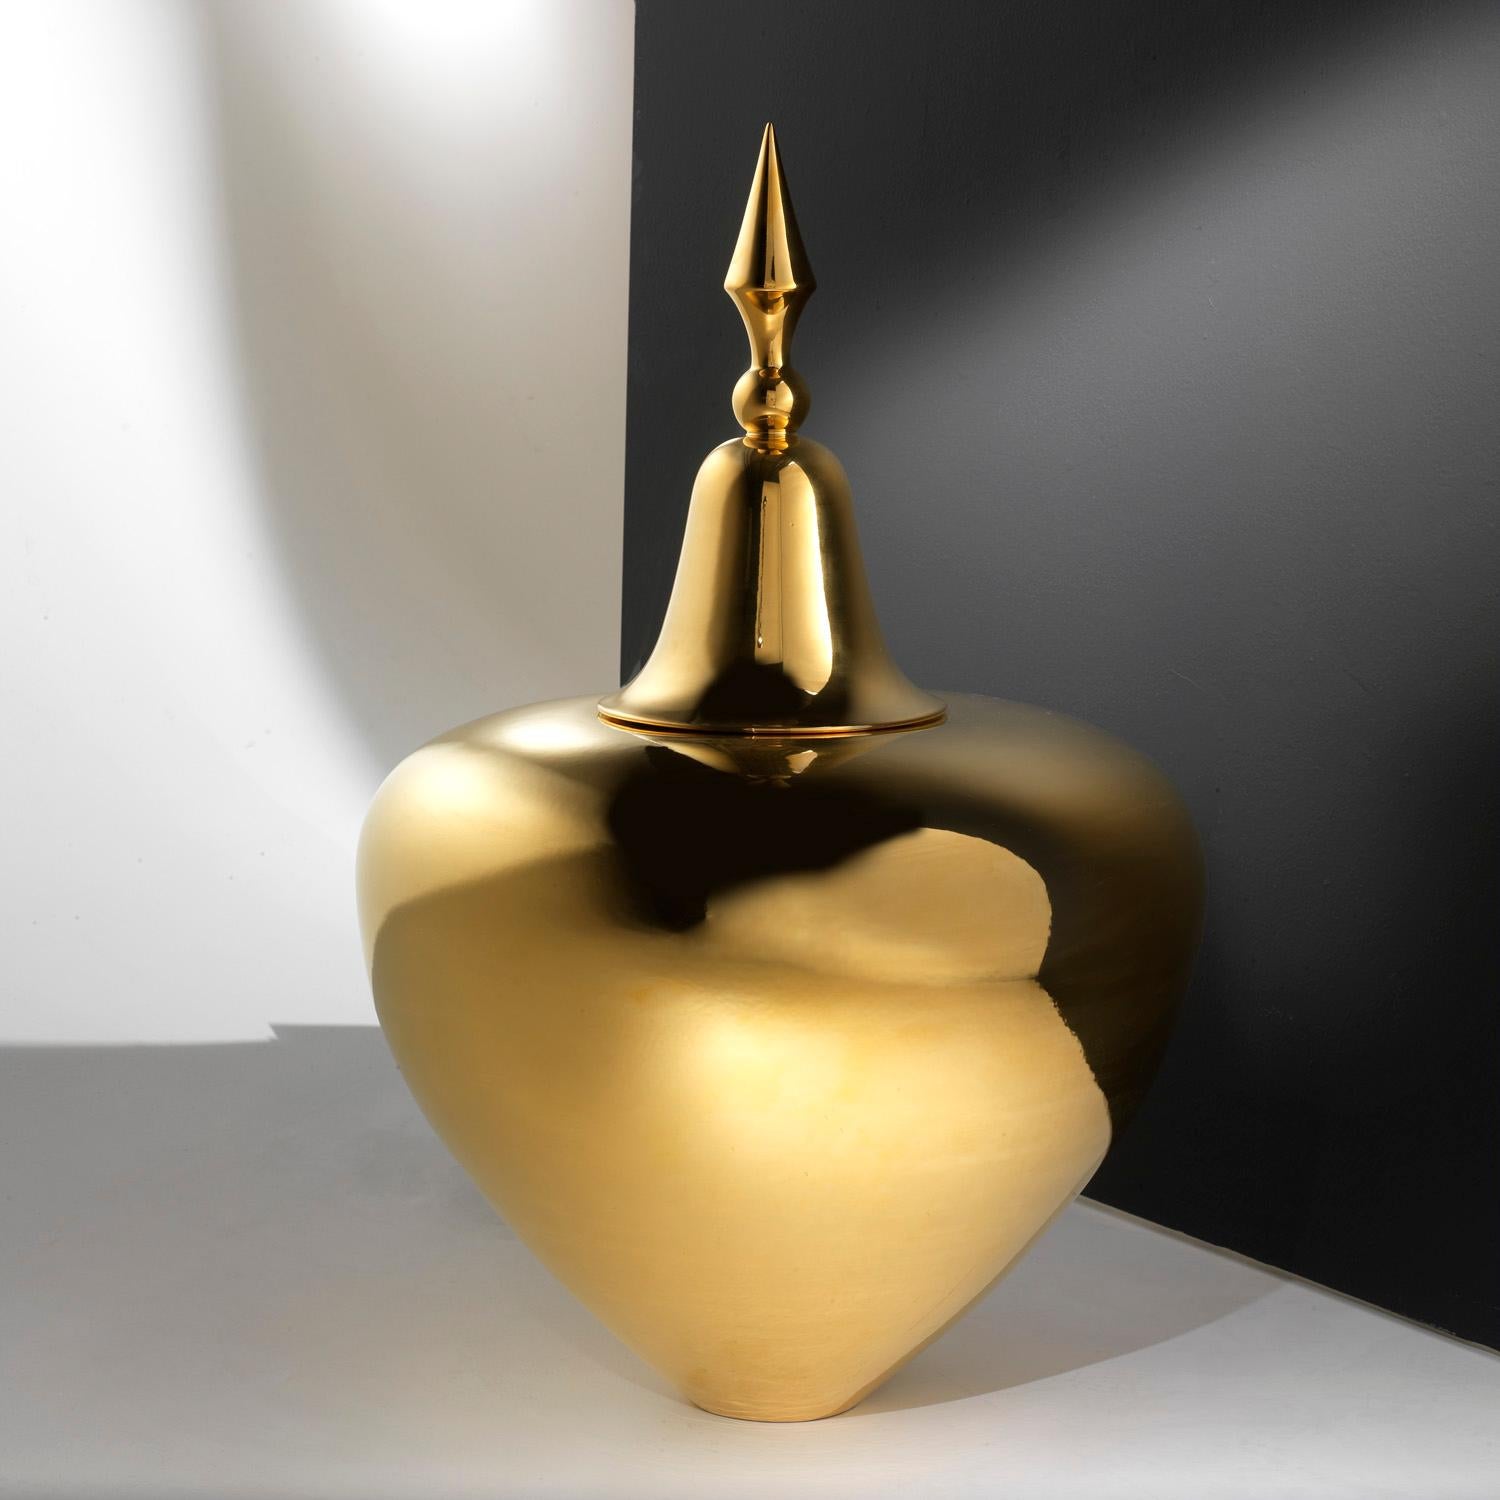 ASHA - Ceramic vase fully handcrafted in 24-karat gold

code VS080 
measures: height 98.0 cm., diameter 58.0 cm.